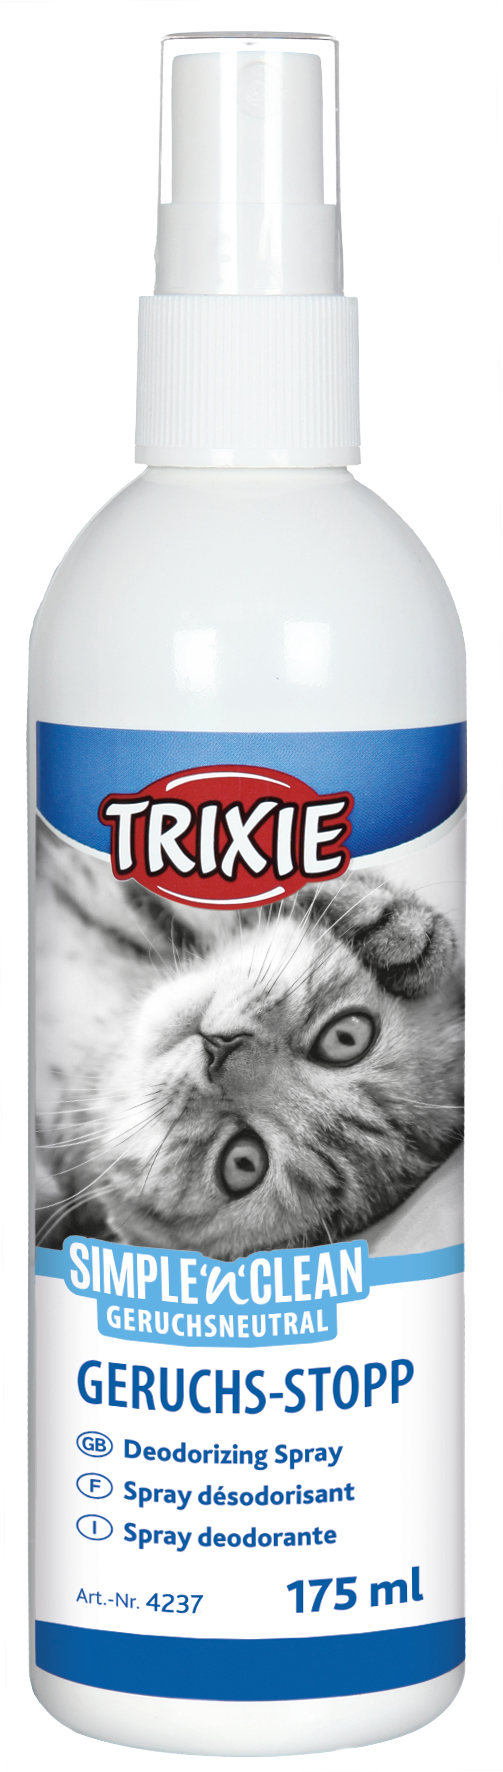 Trixie Heimtierbedarf Simple’n’Clean Geruchs-Stopp